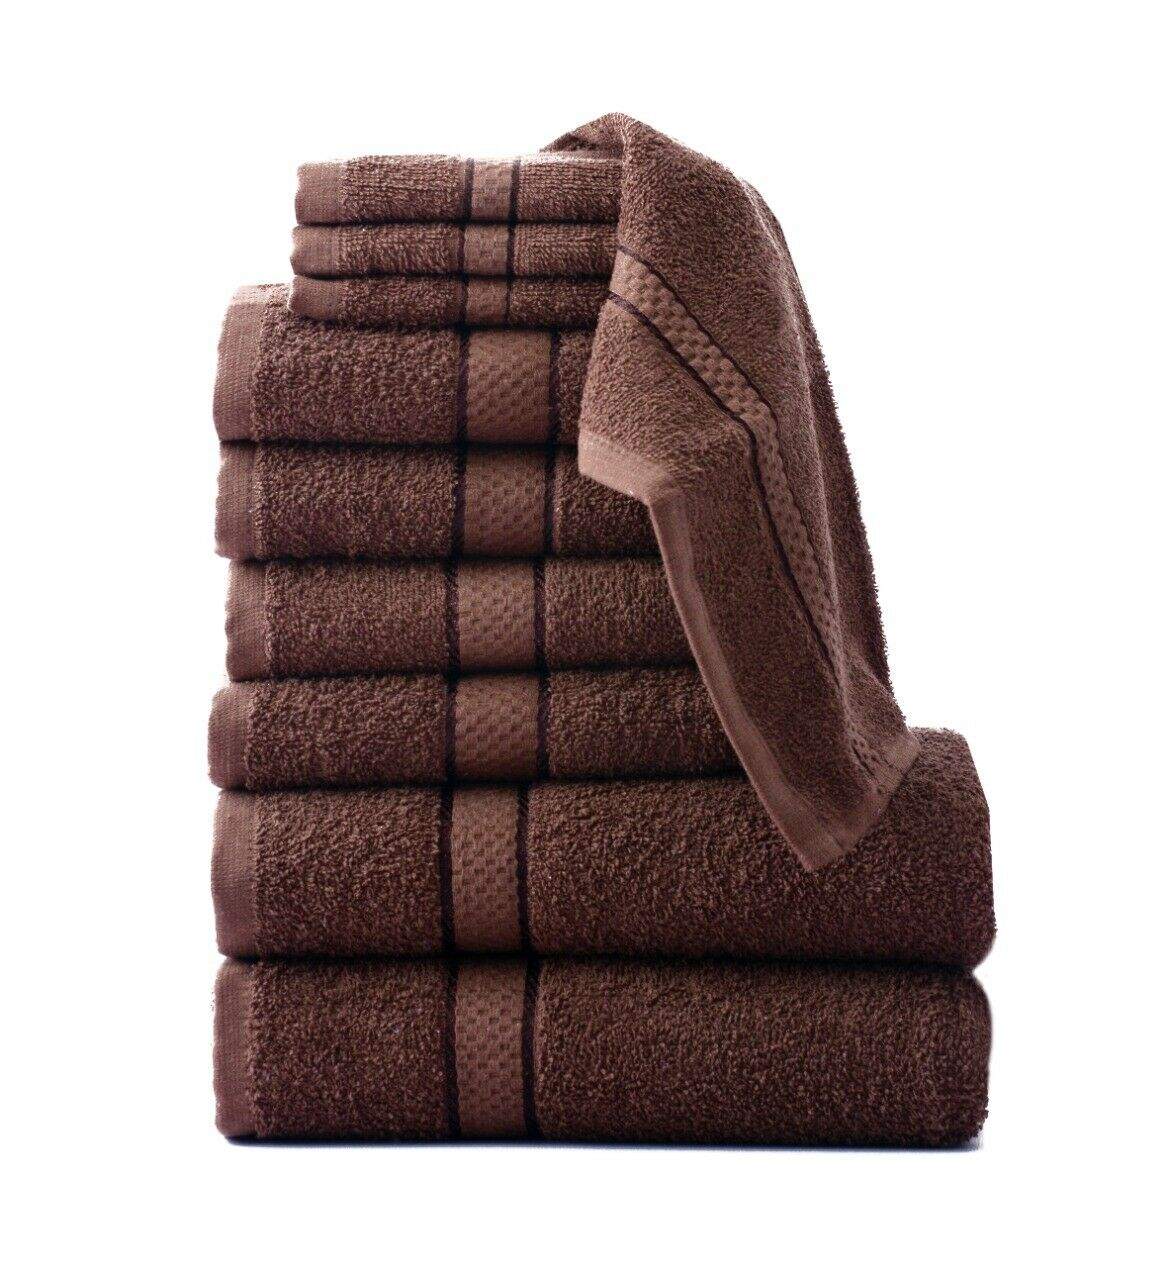 bathroom towel sets